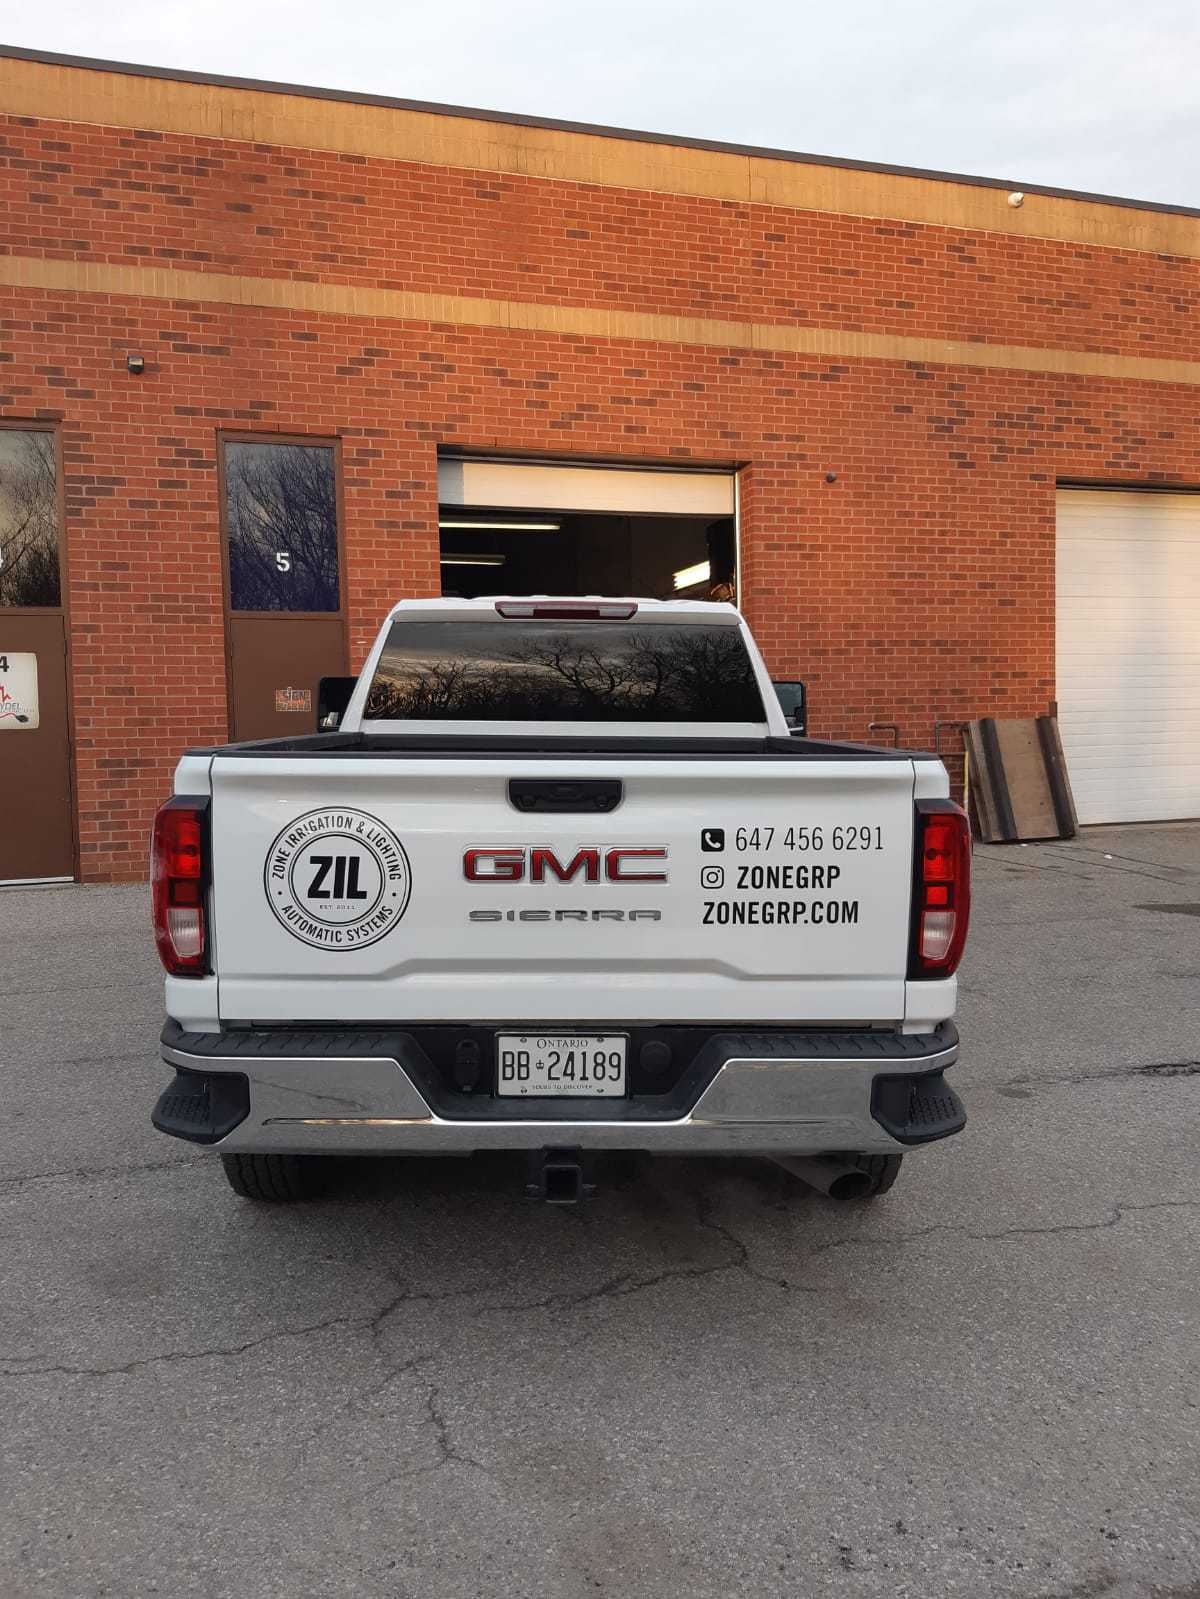 pick-up truck vinyl lettering on the back side